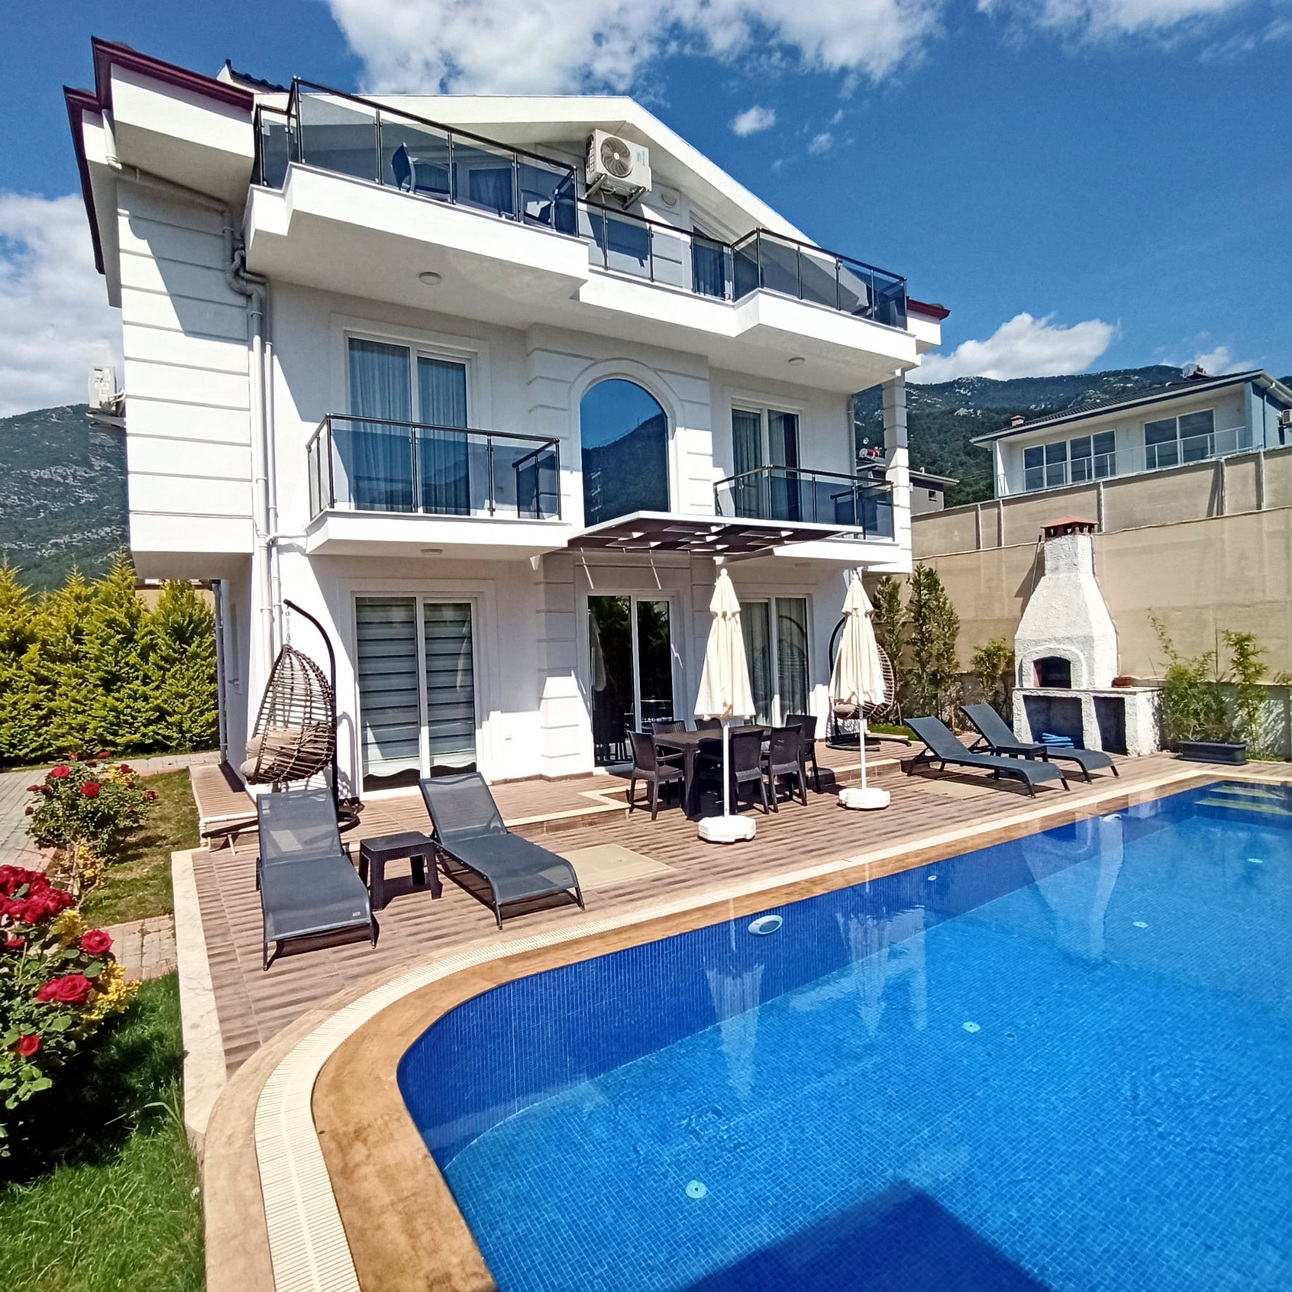 Luxury Detached Triplex 3 bedroom Villa with Private Pool in Ovacik